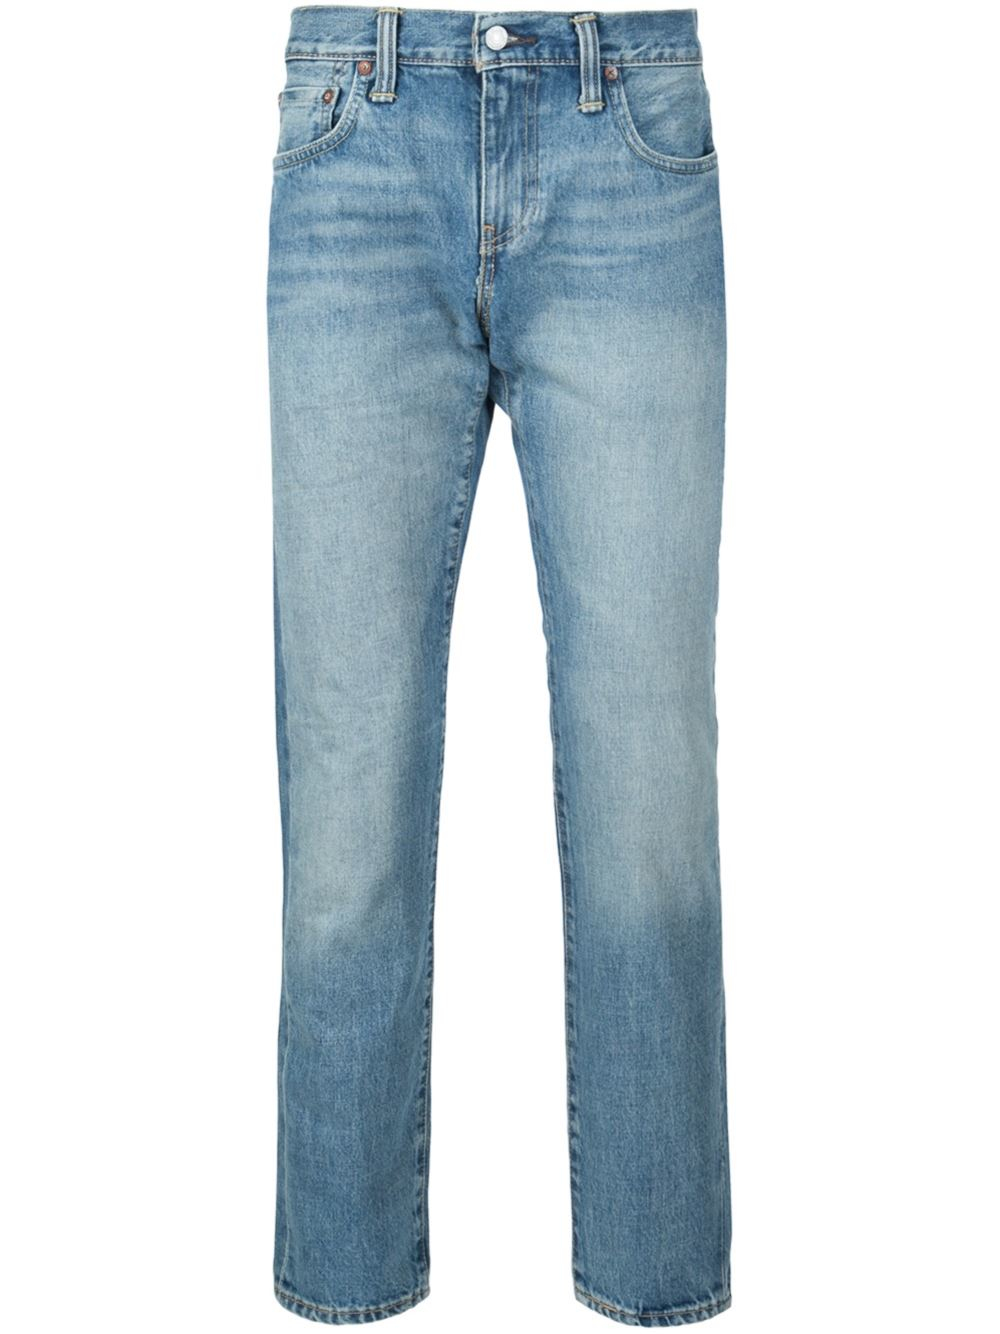 Lyst - Levi's Stonewashed Regular Jeans in Blue for Men